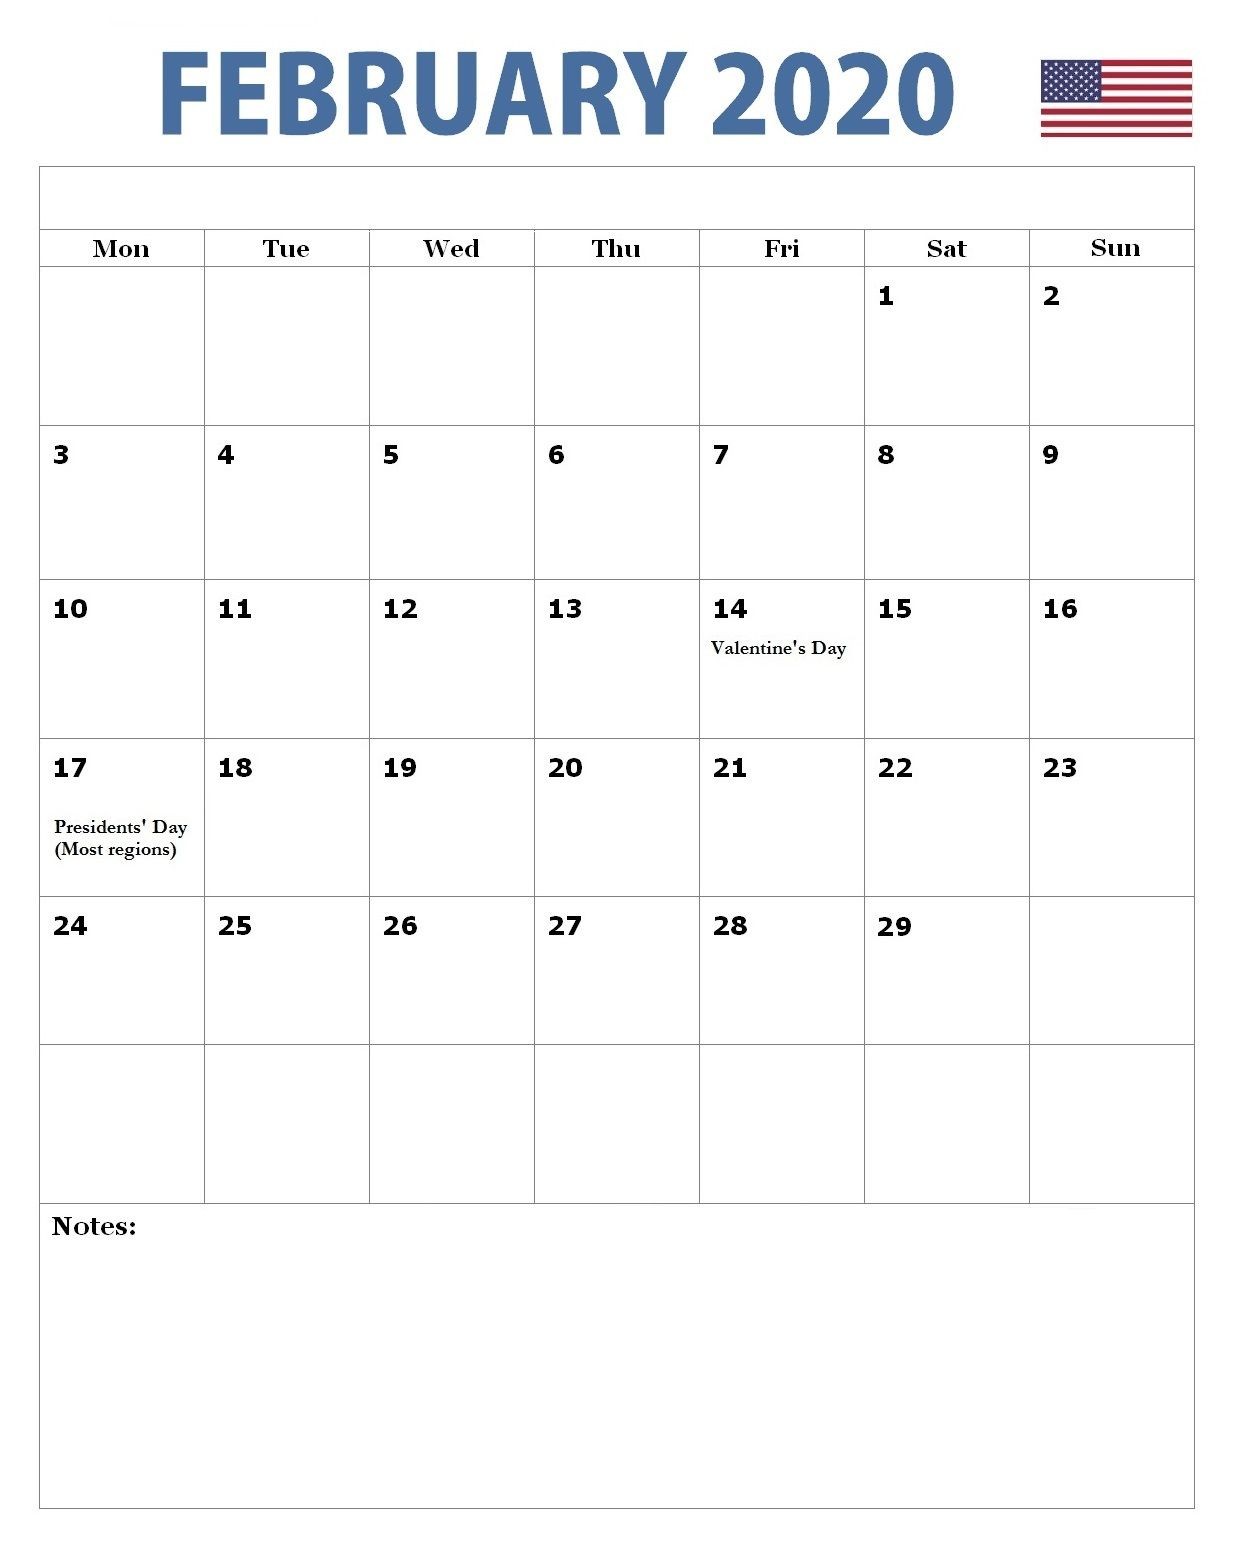 February 2020 American Holidays Calendar